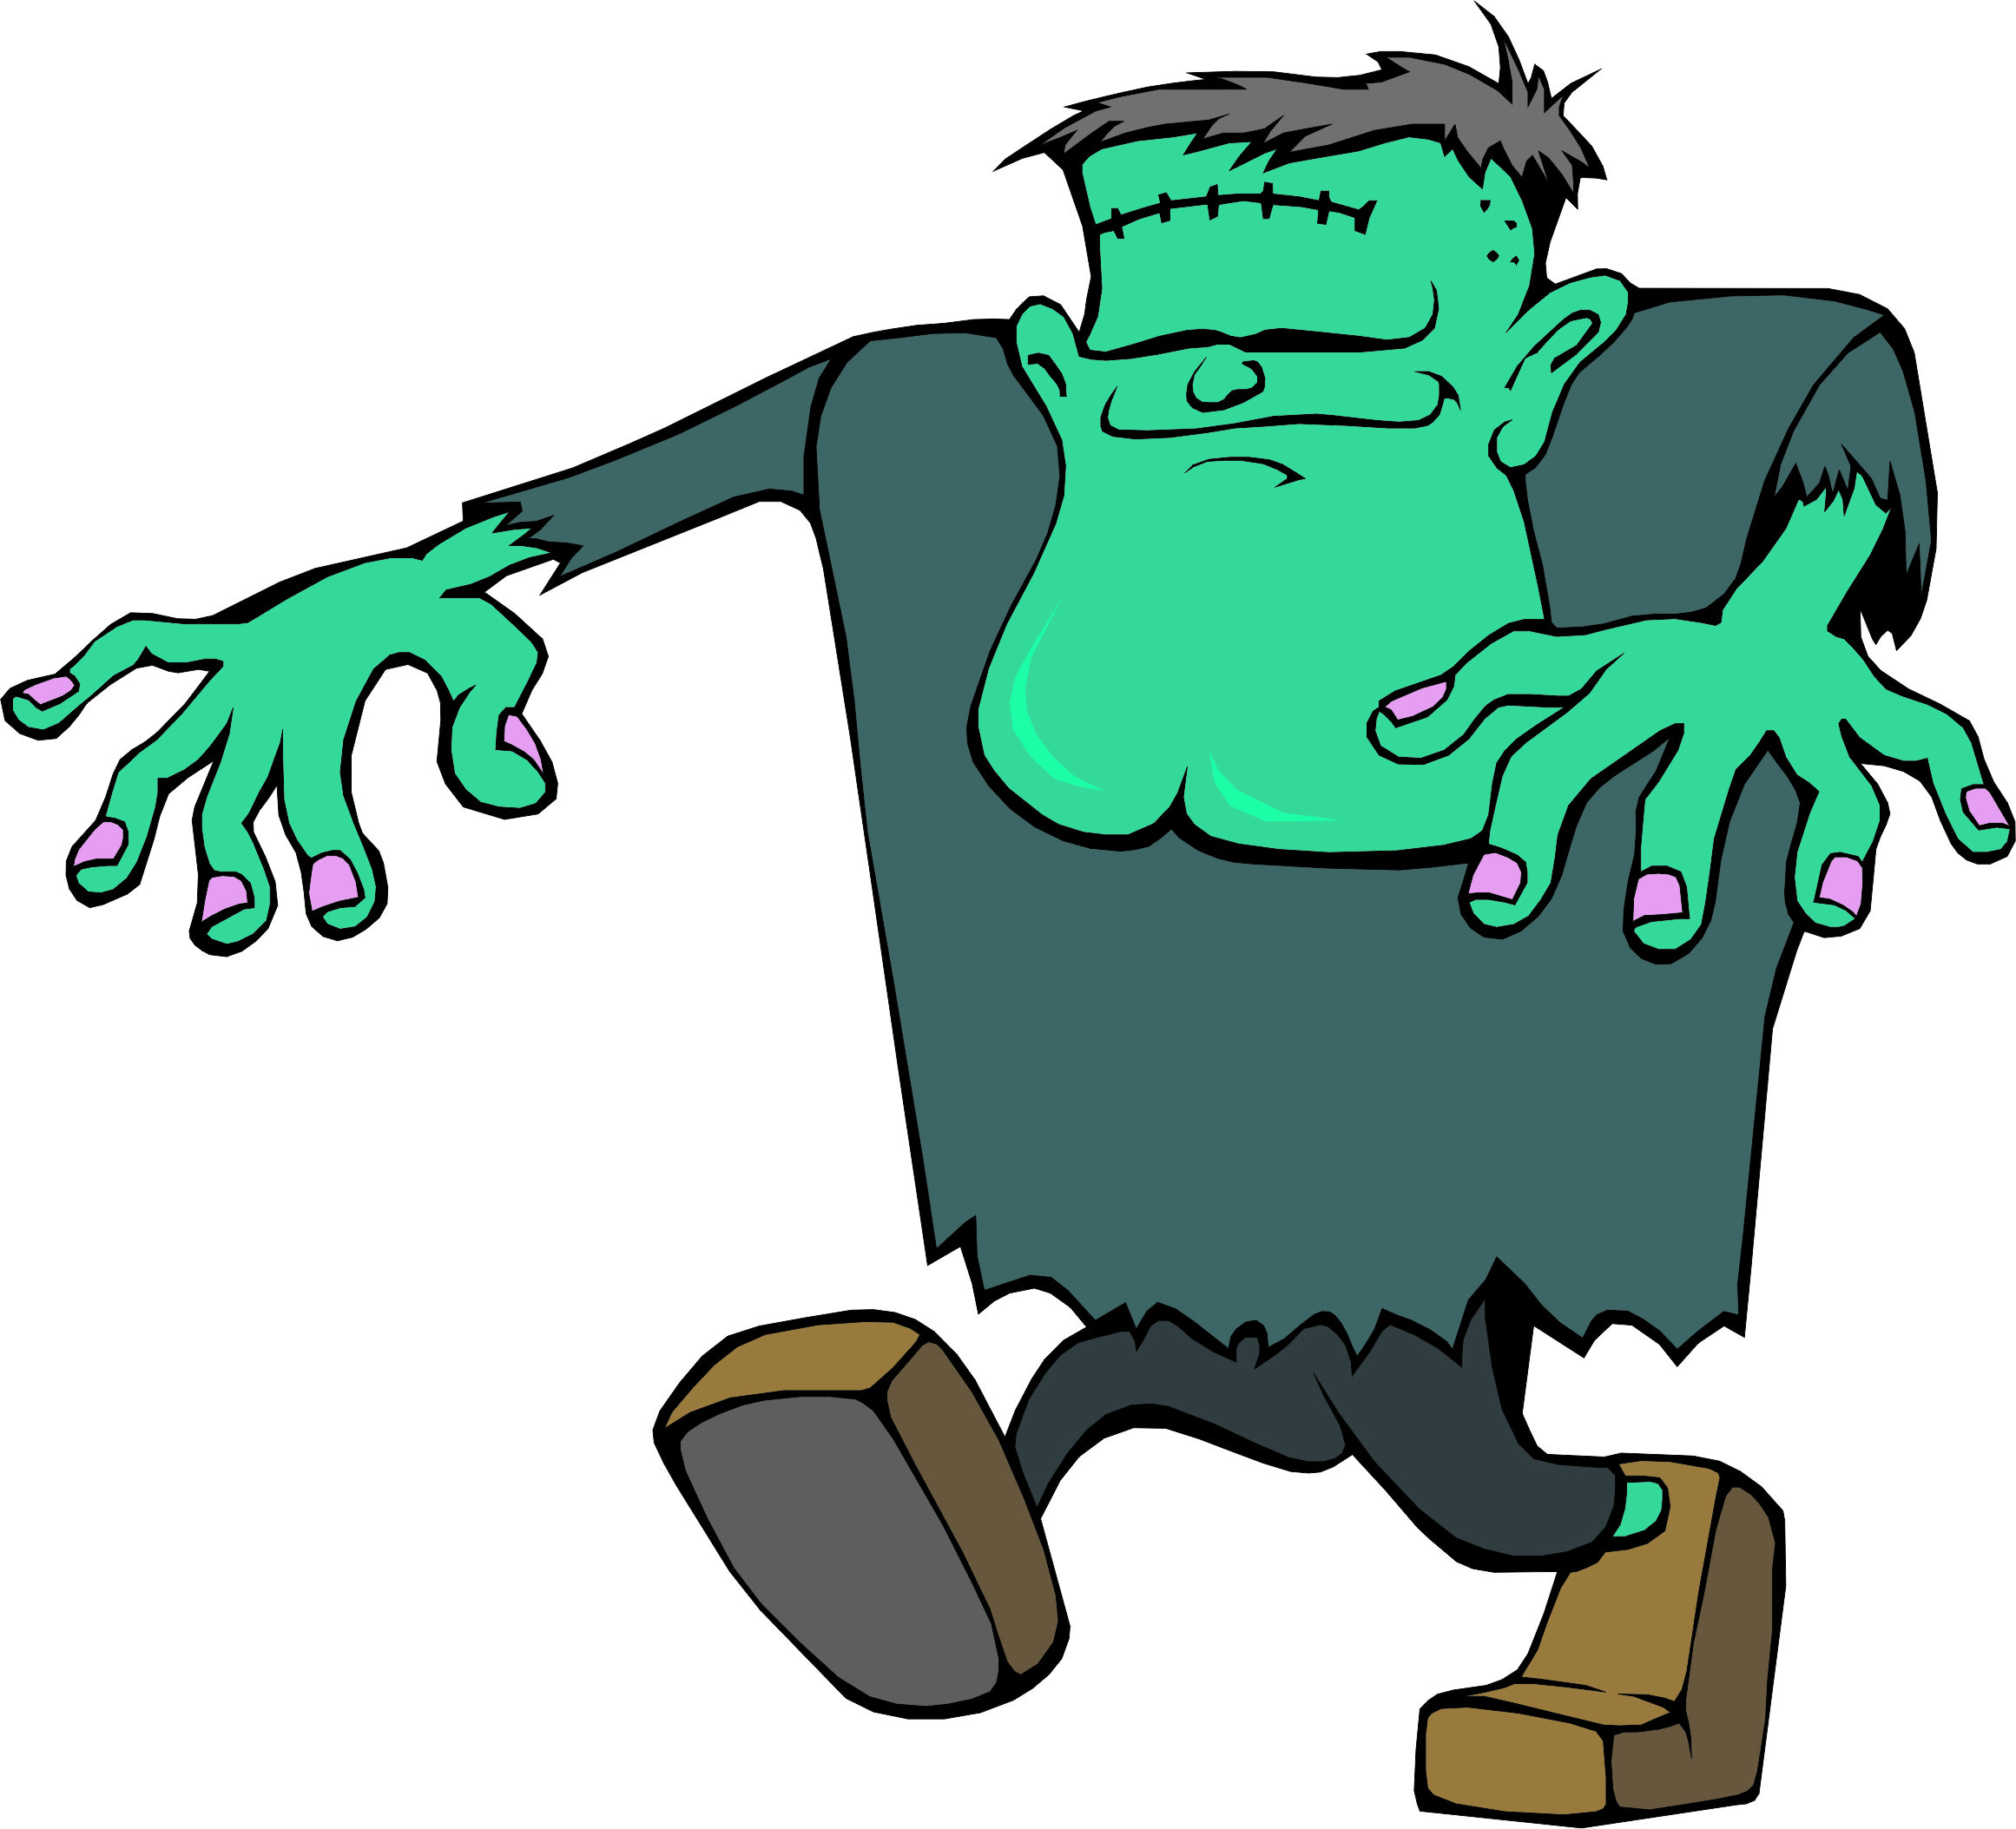 Frankenstein cartoon images clip art